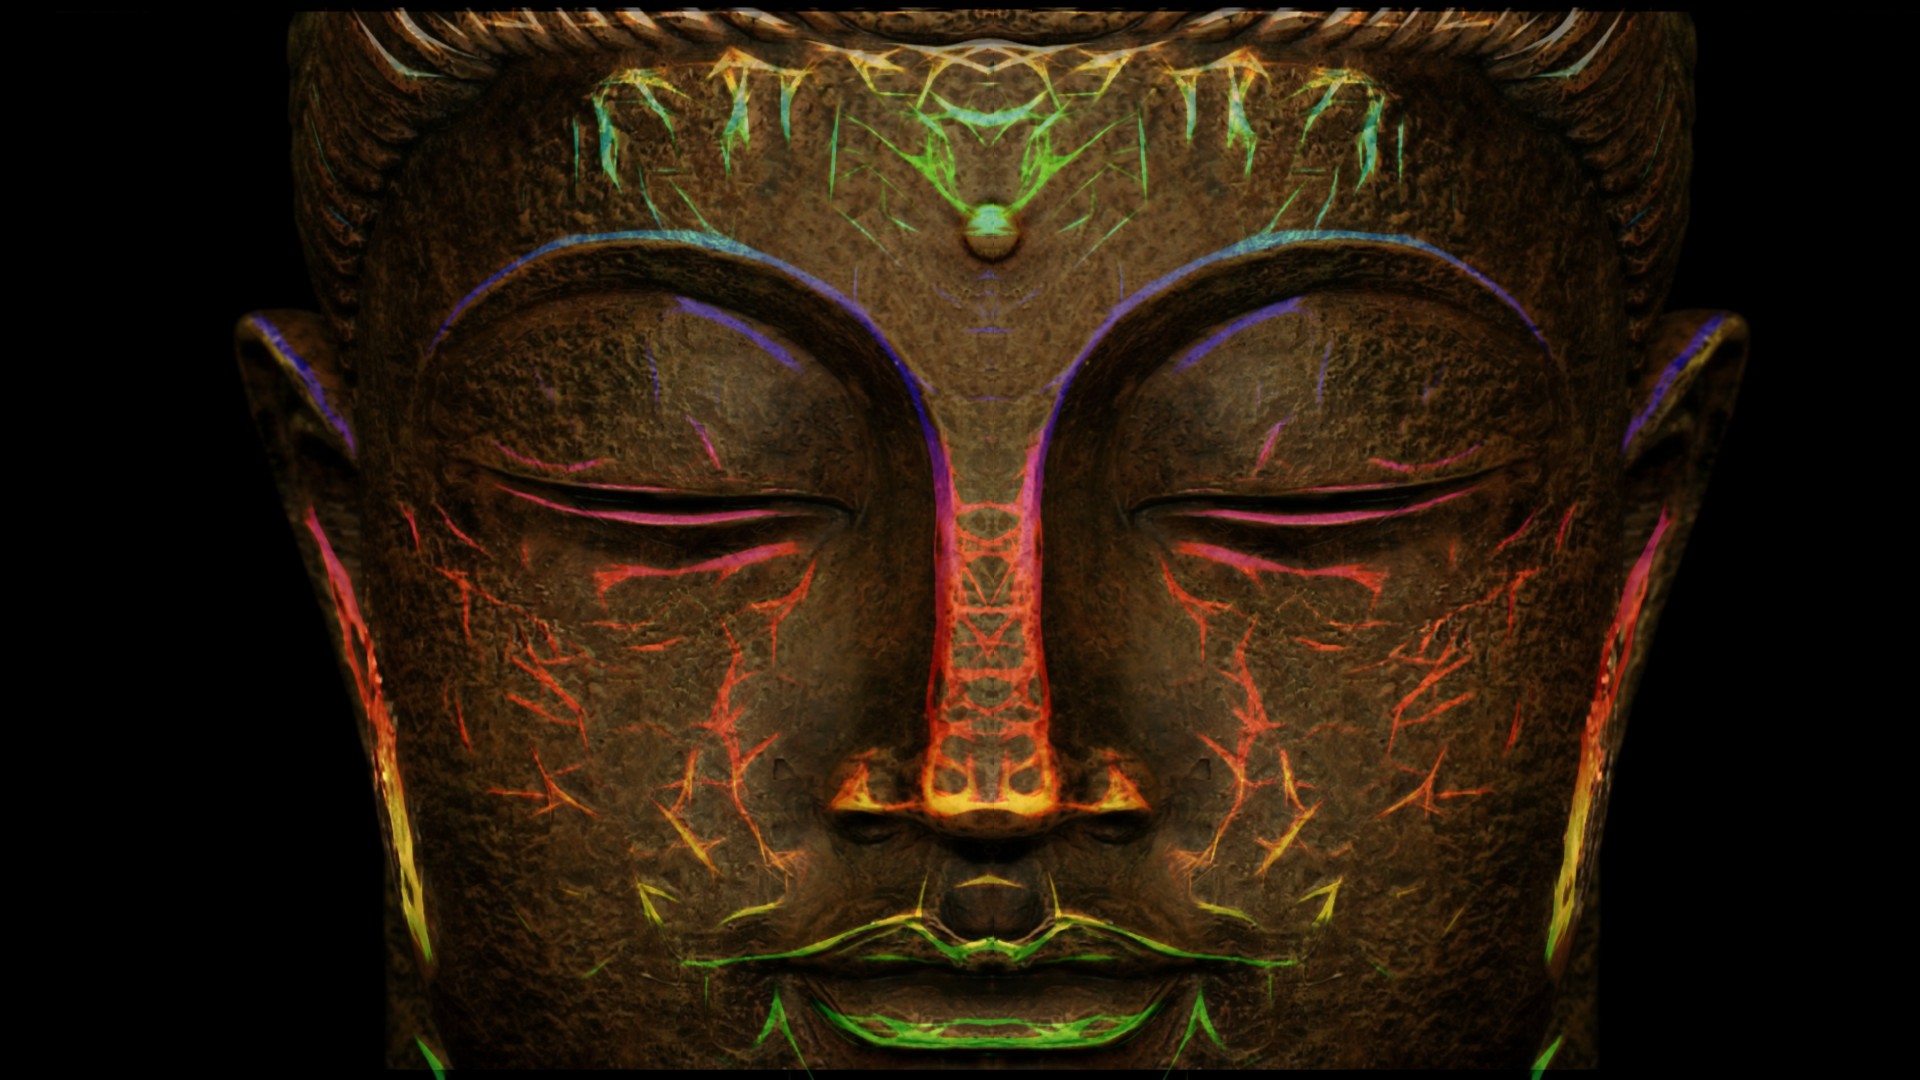 Buddha HD Wallpaper Widescreen - WallpaperSafari